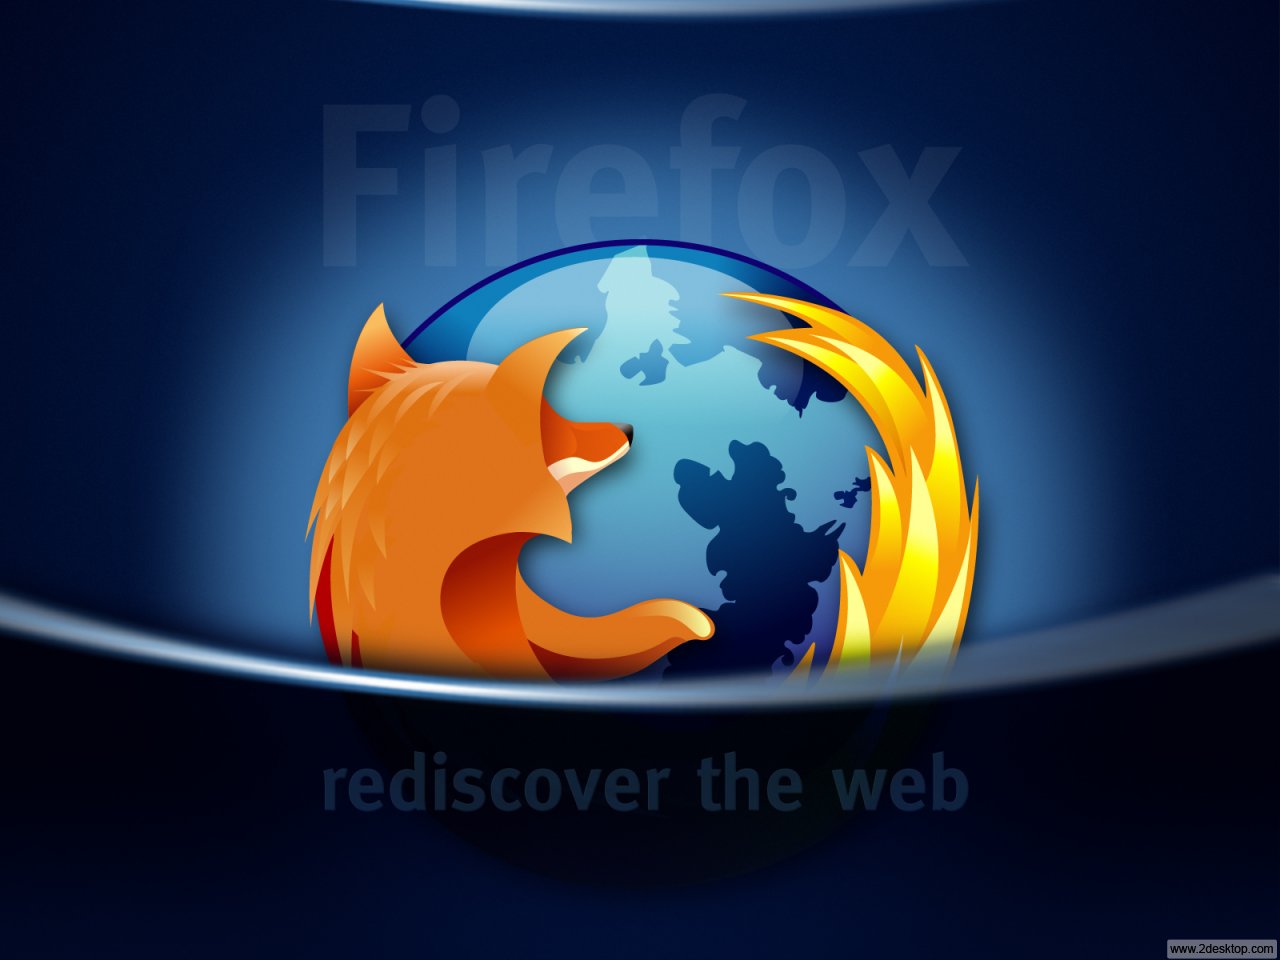 mozilla_firefox_browser__rediscover_the_web_-desktopnexus-com_